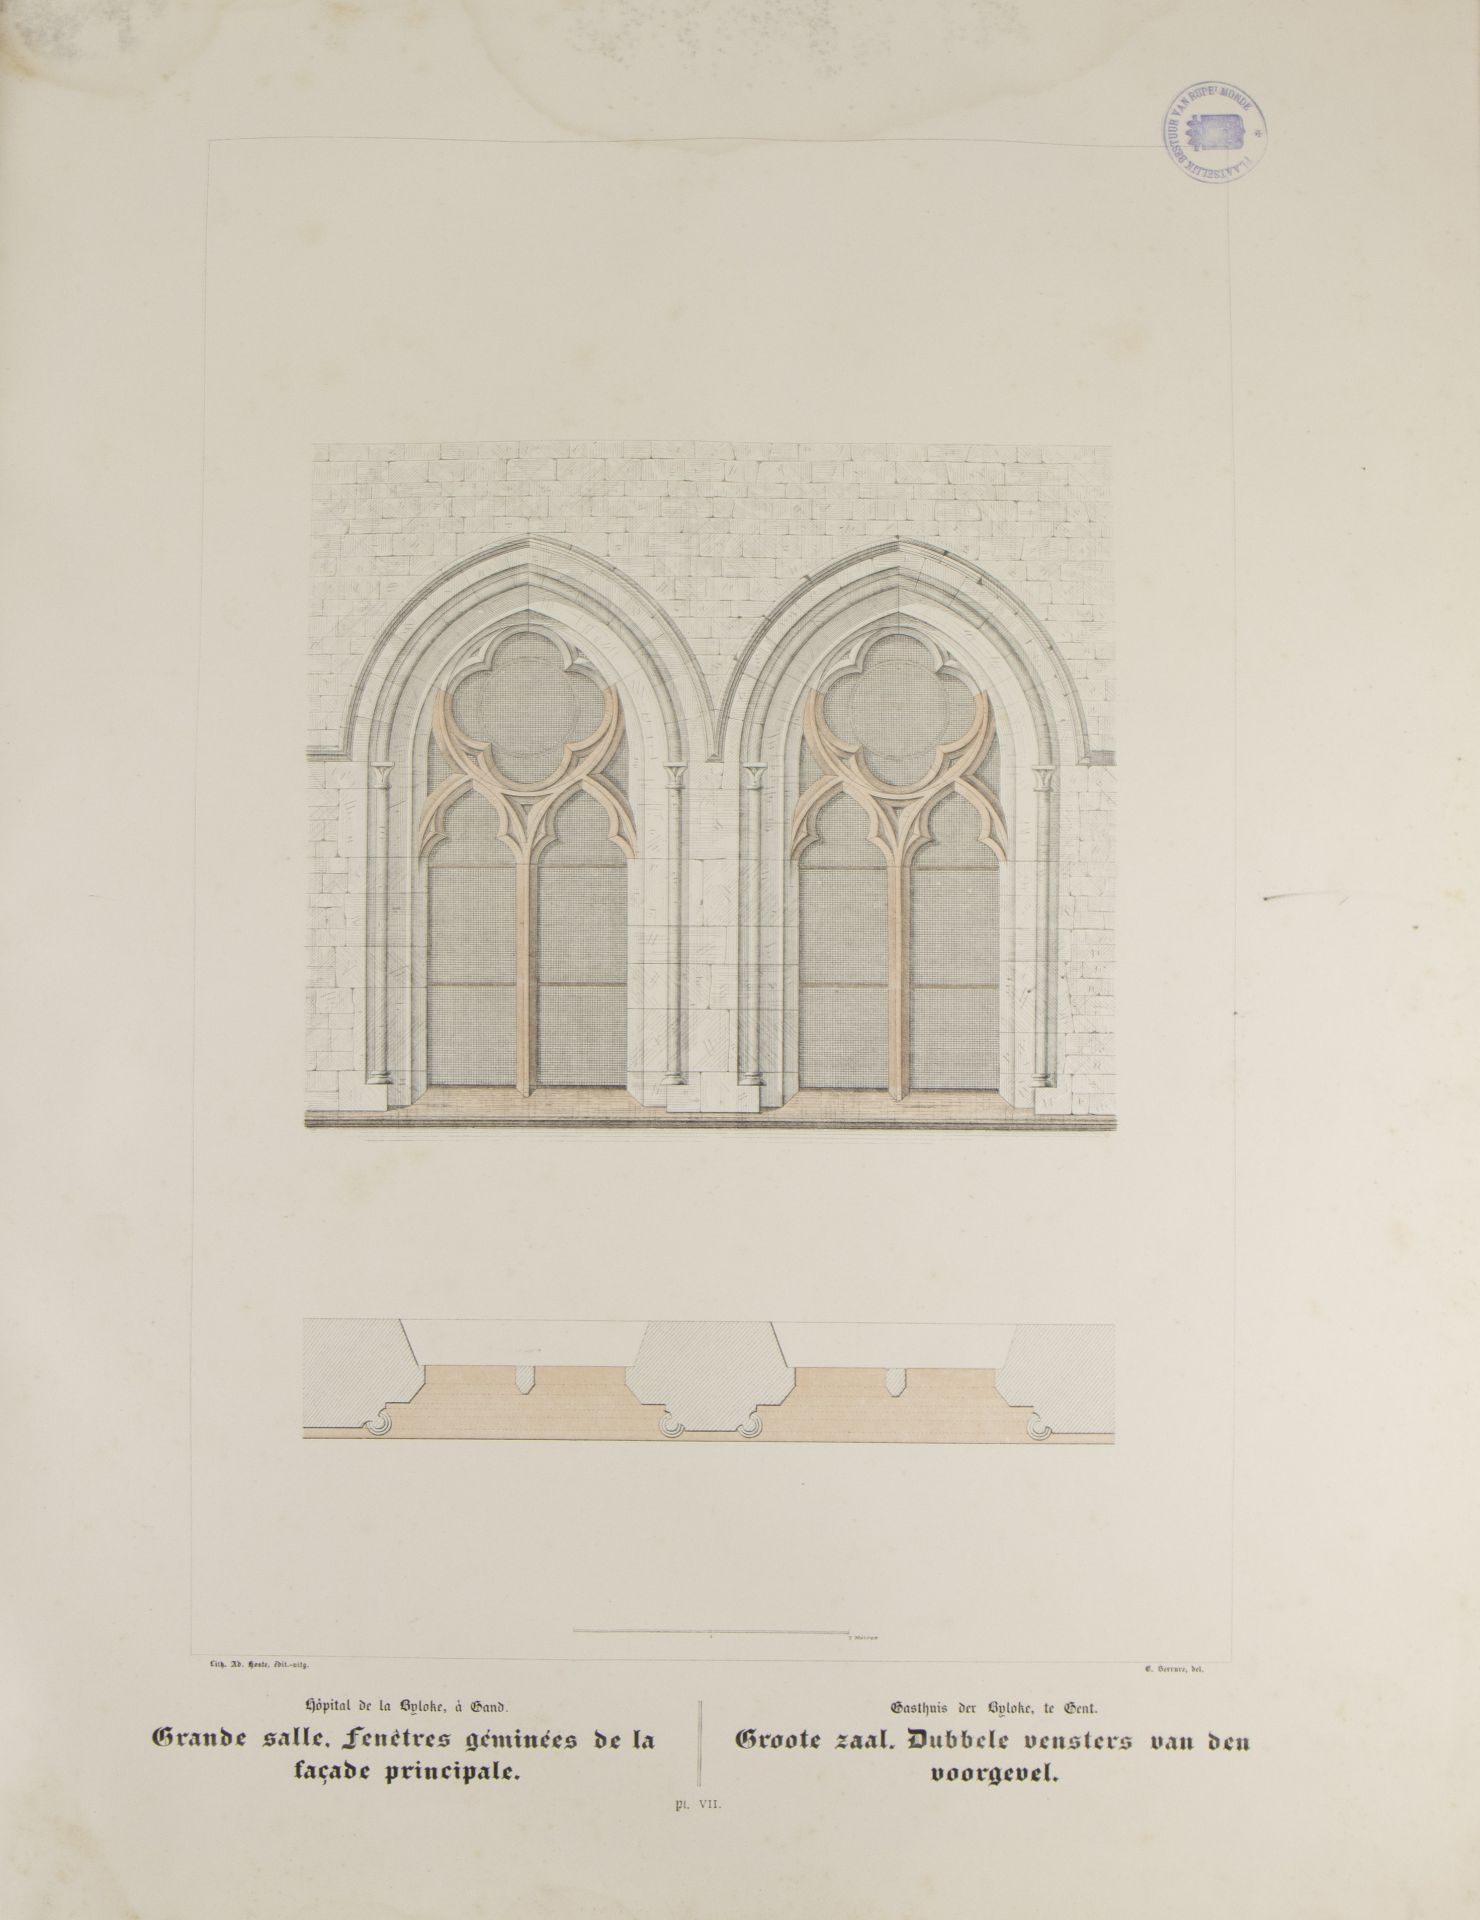 L'Hopital de la Byloke by Arthur Verhaegen 1889, 43 plates - Image 2 of 5